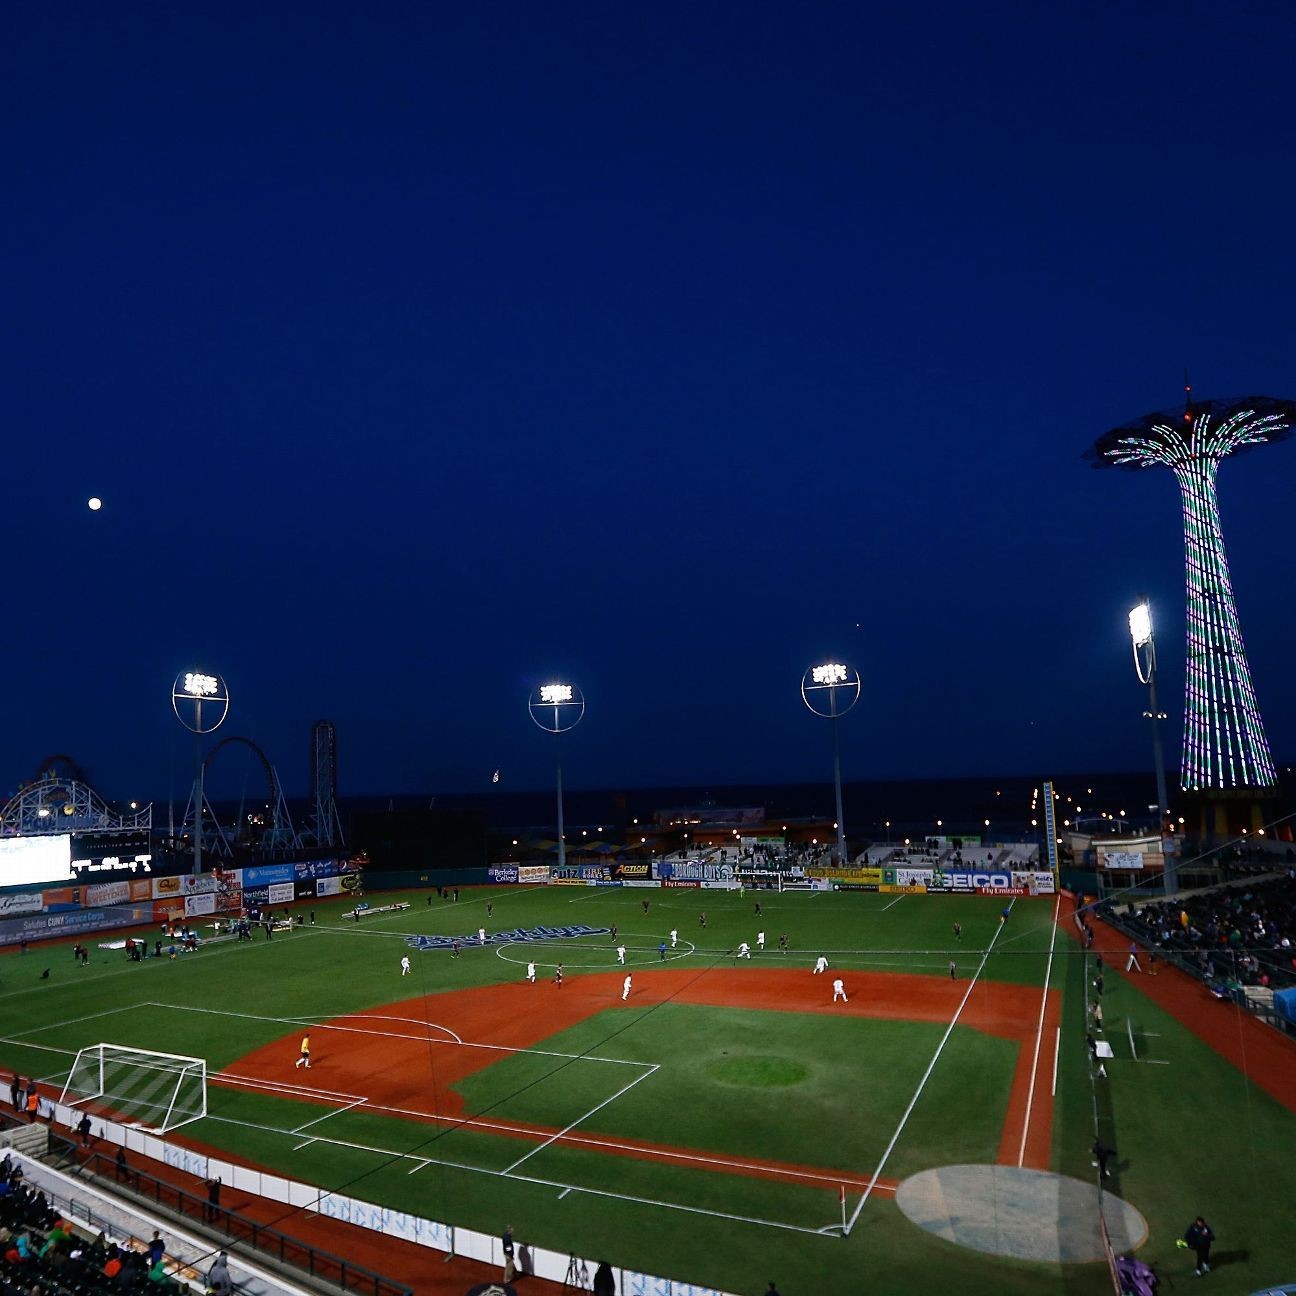 Brooklyn to host World Baseball Classic qualifier